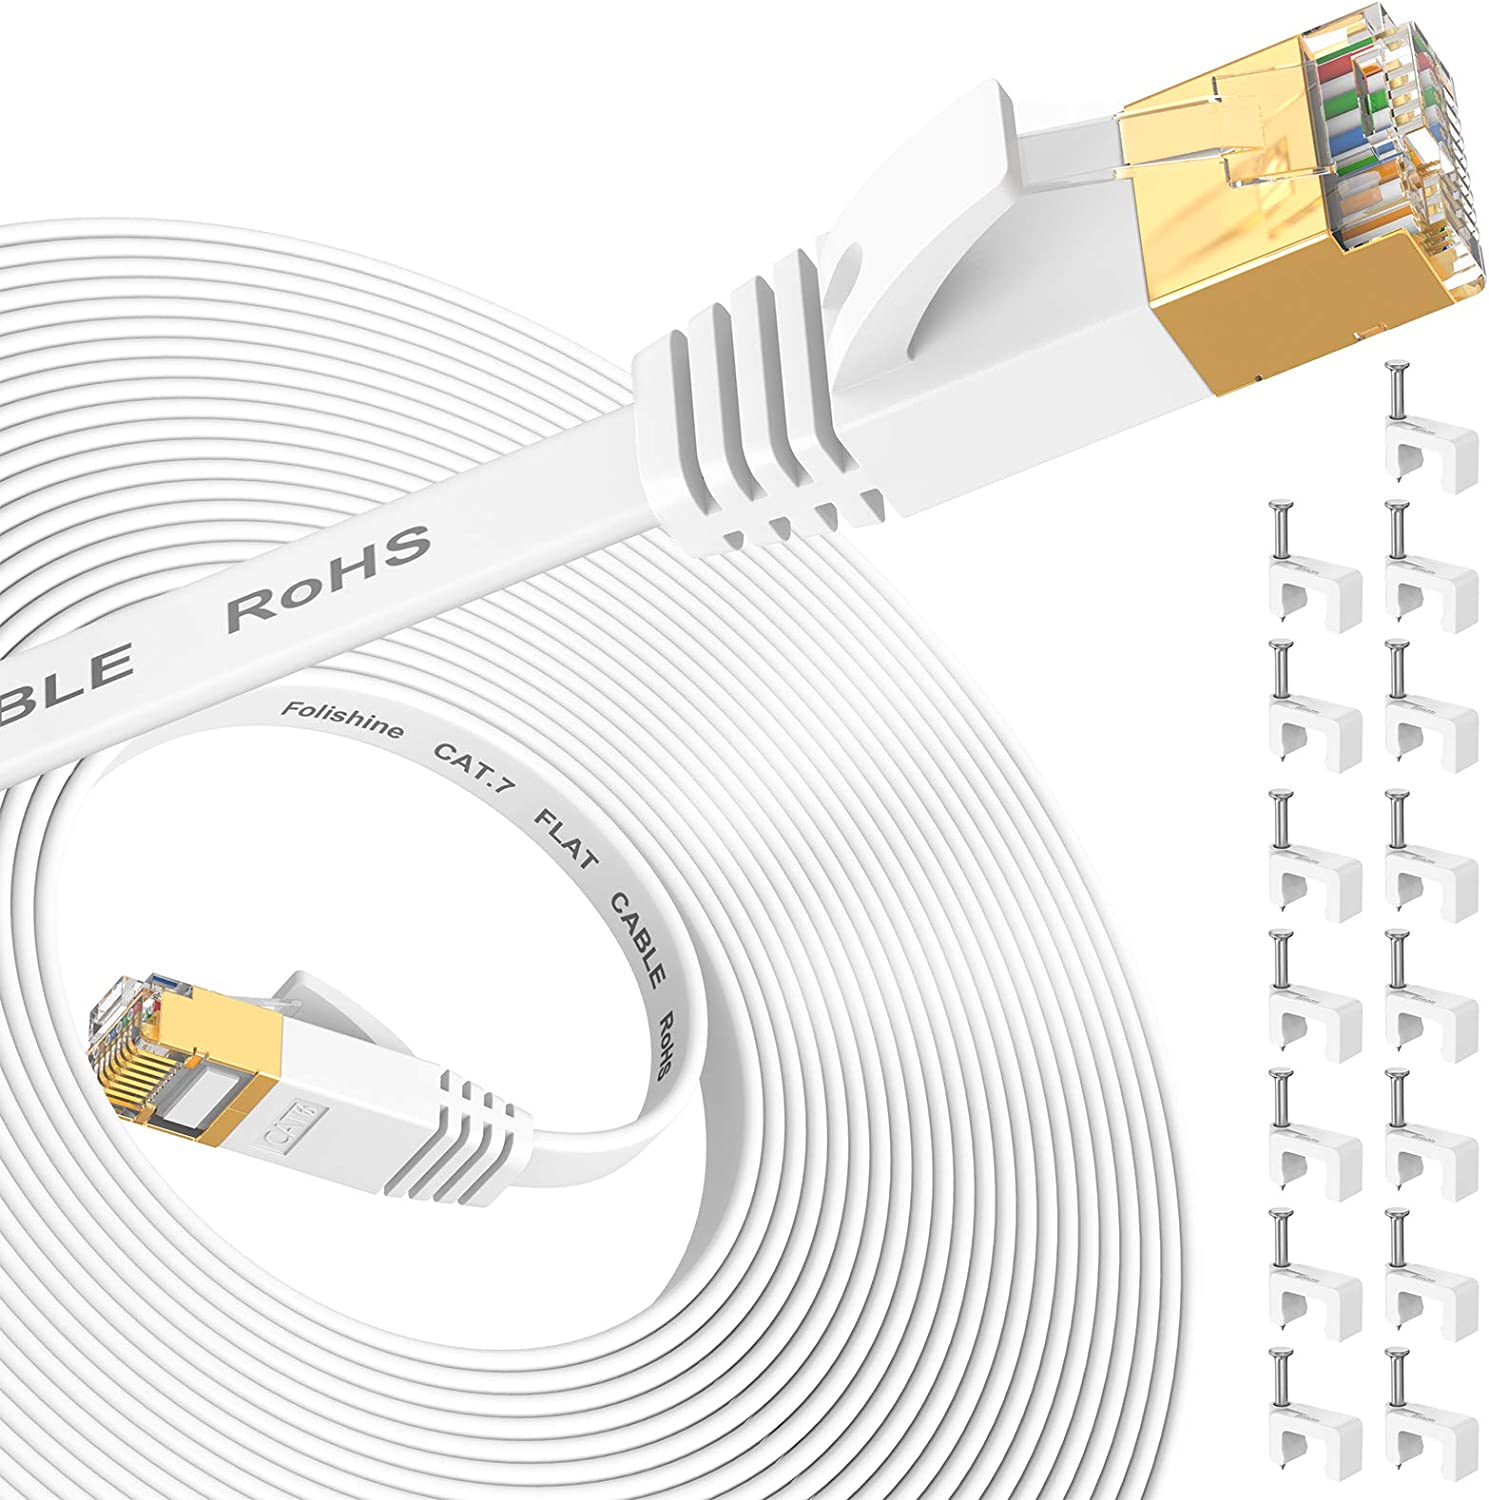 Folishine Ethernet Cable 25 ft, Supports Cat 8/ Cat 7 [...]